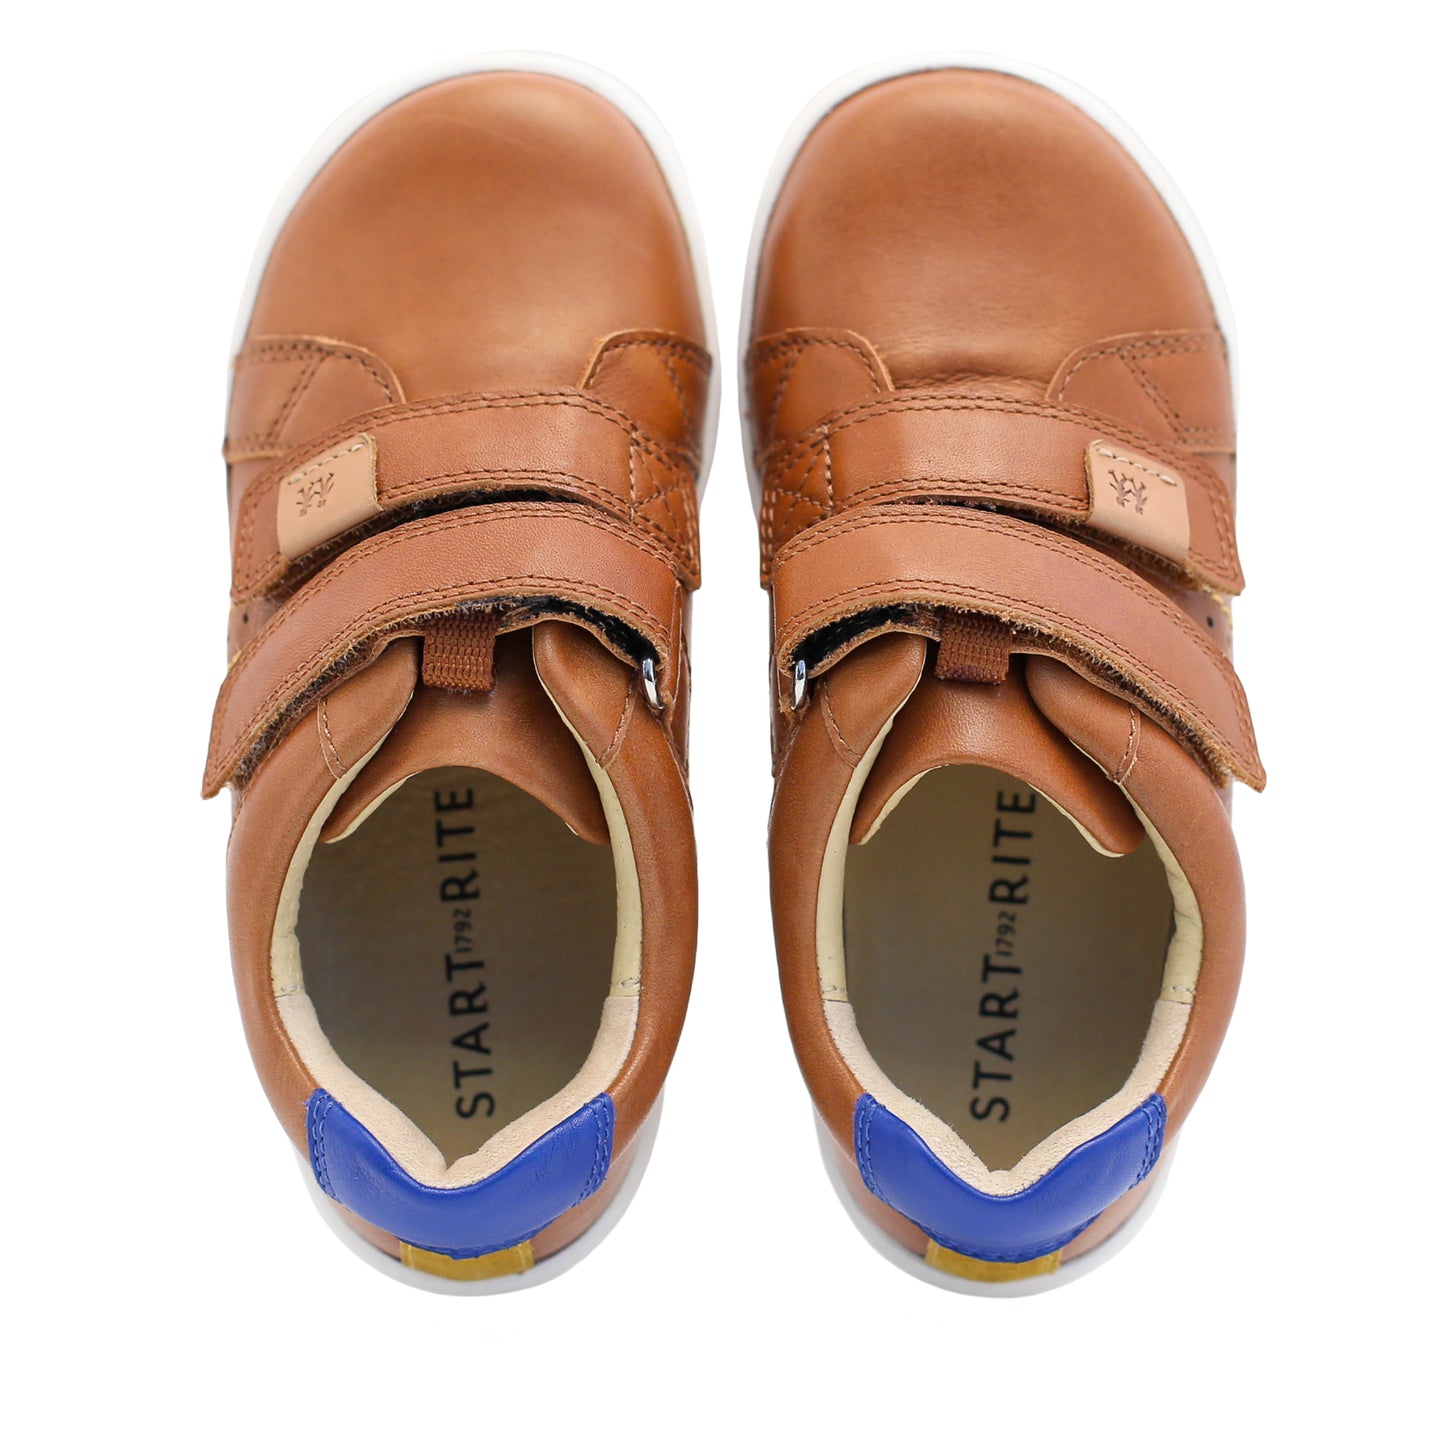 Explore Tan Brown Leather Boy's Riptape Pre School Shoe